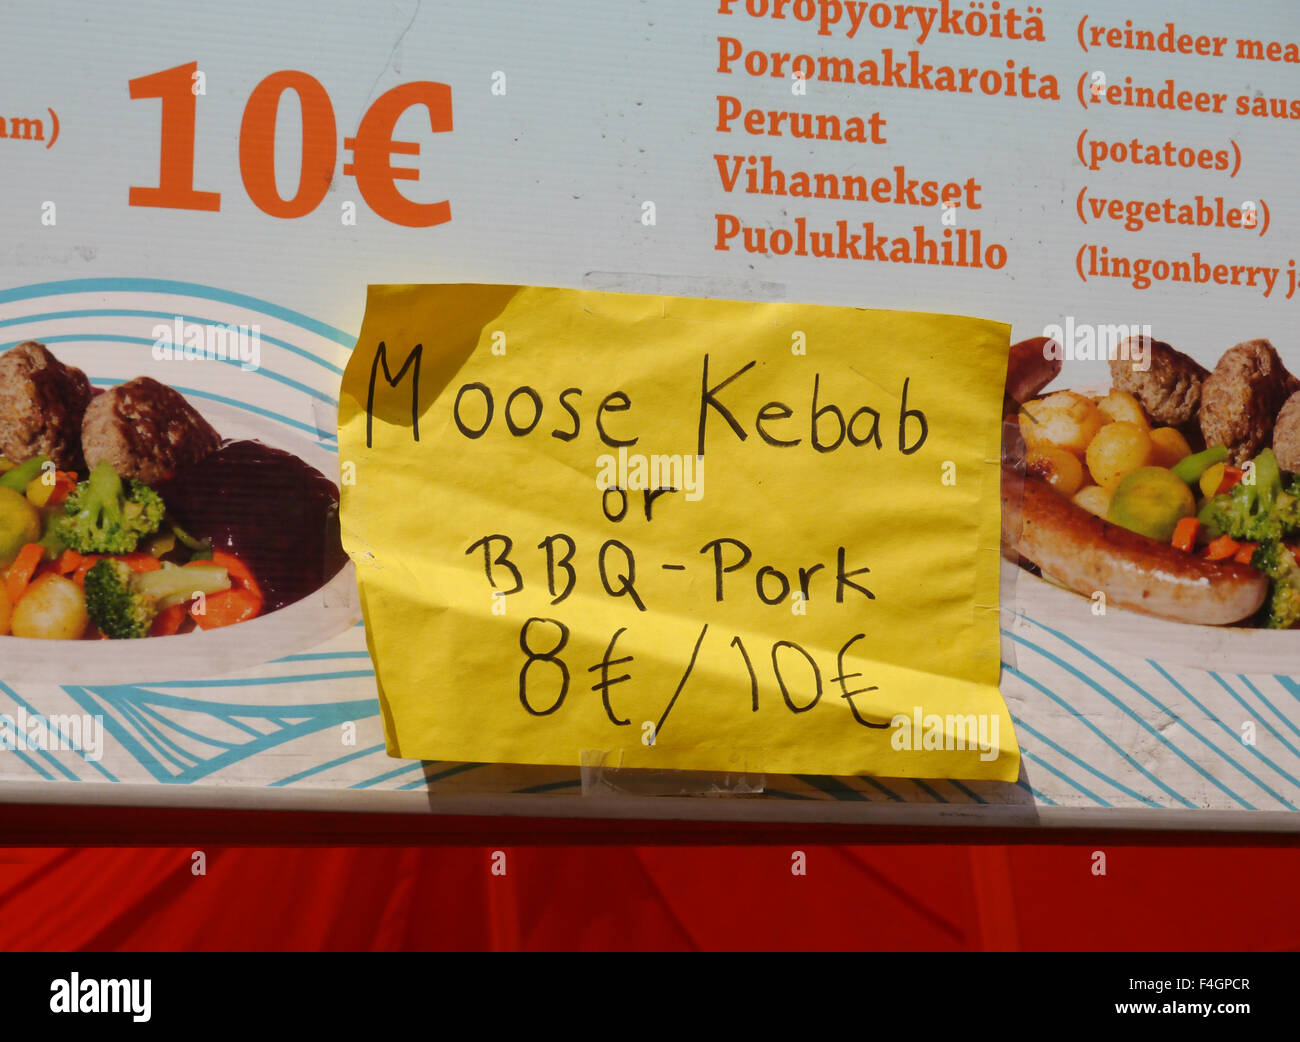 A post it note on a menu in Helsinki, Finland advertising Moose kebabs Stock Photo